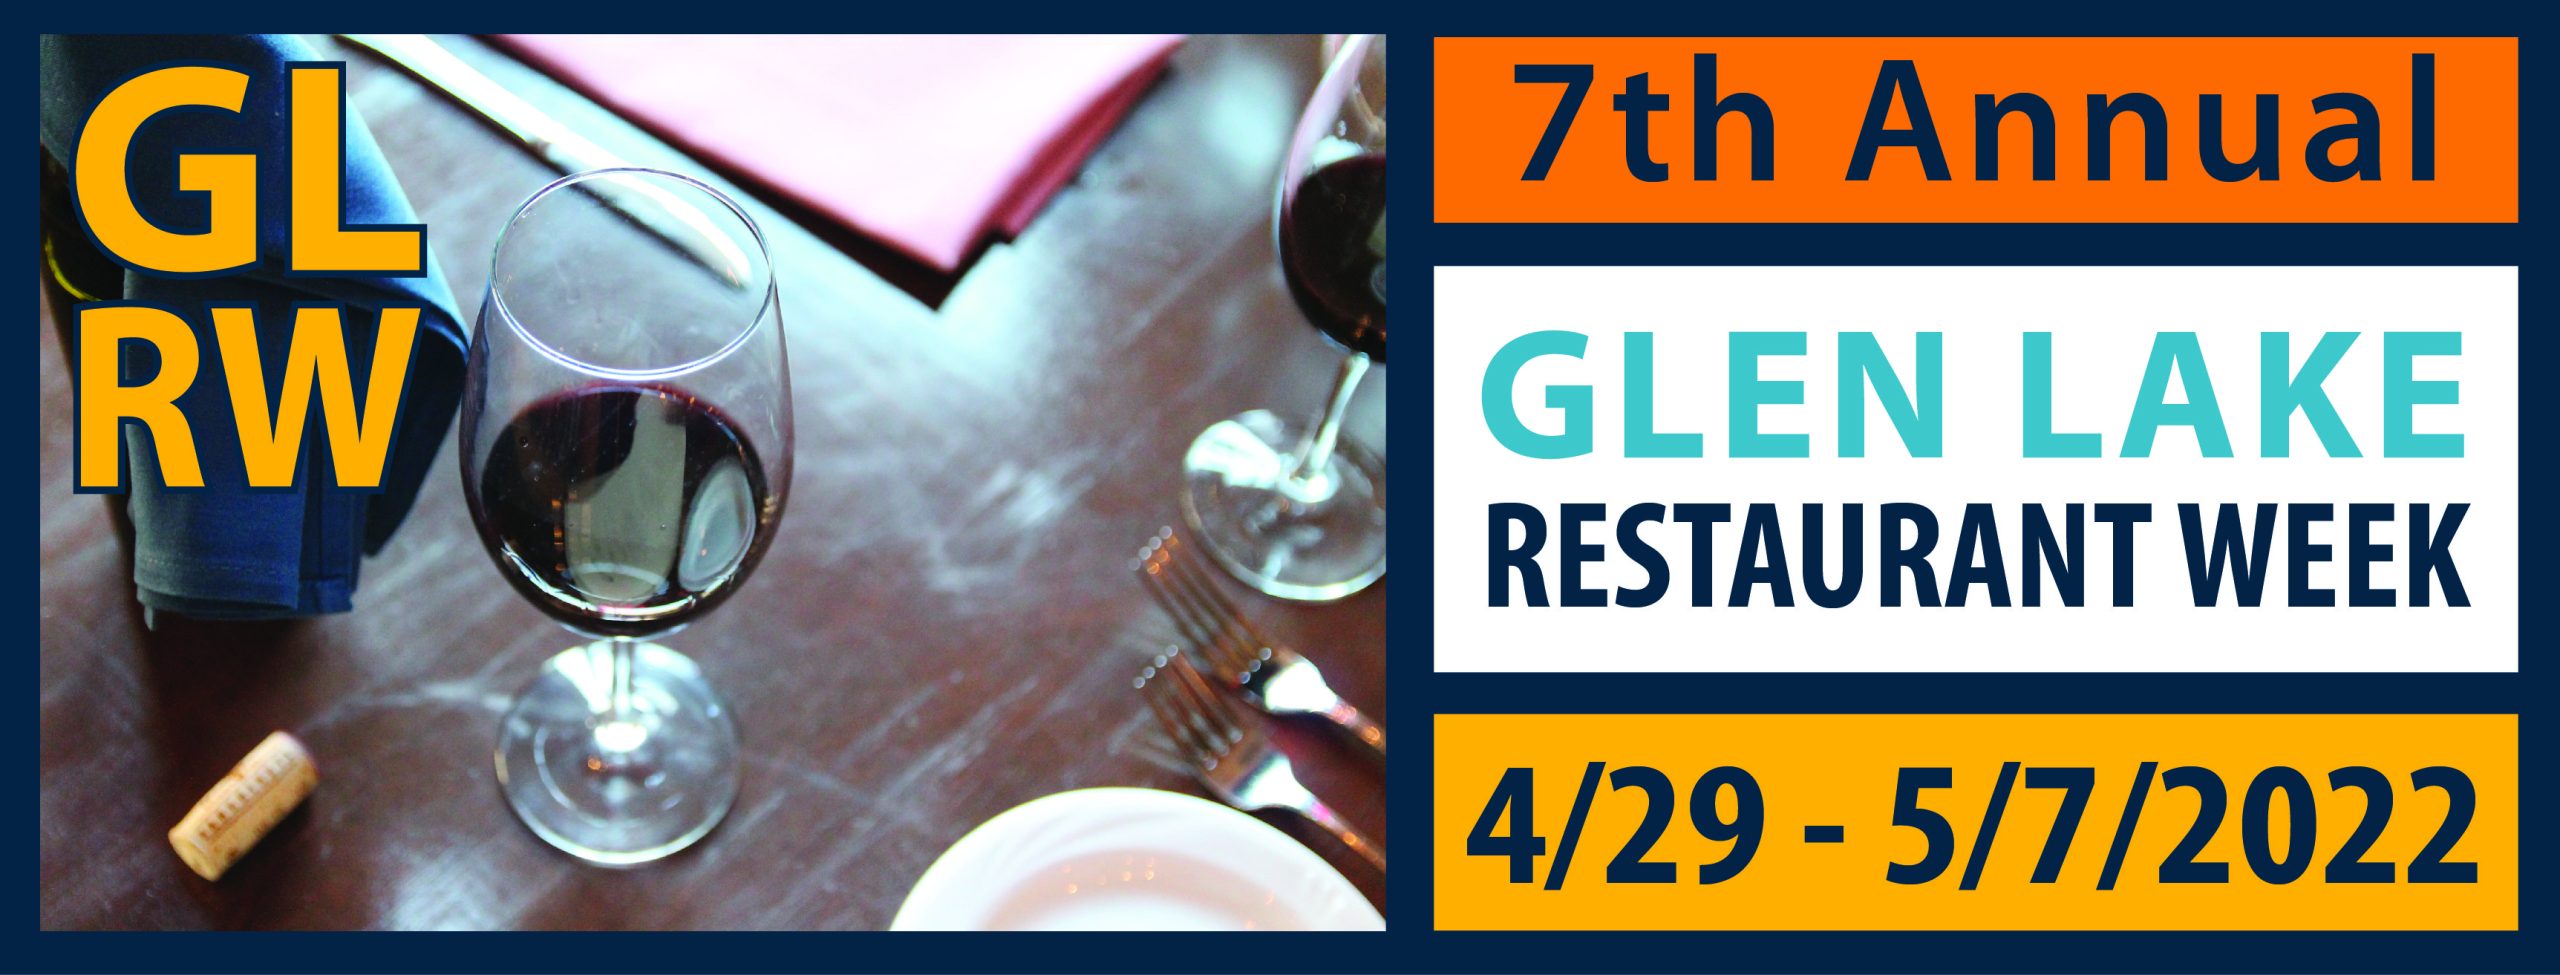 7th annual glen lake restaurant week graphic